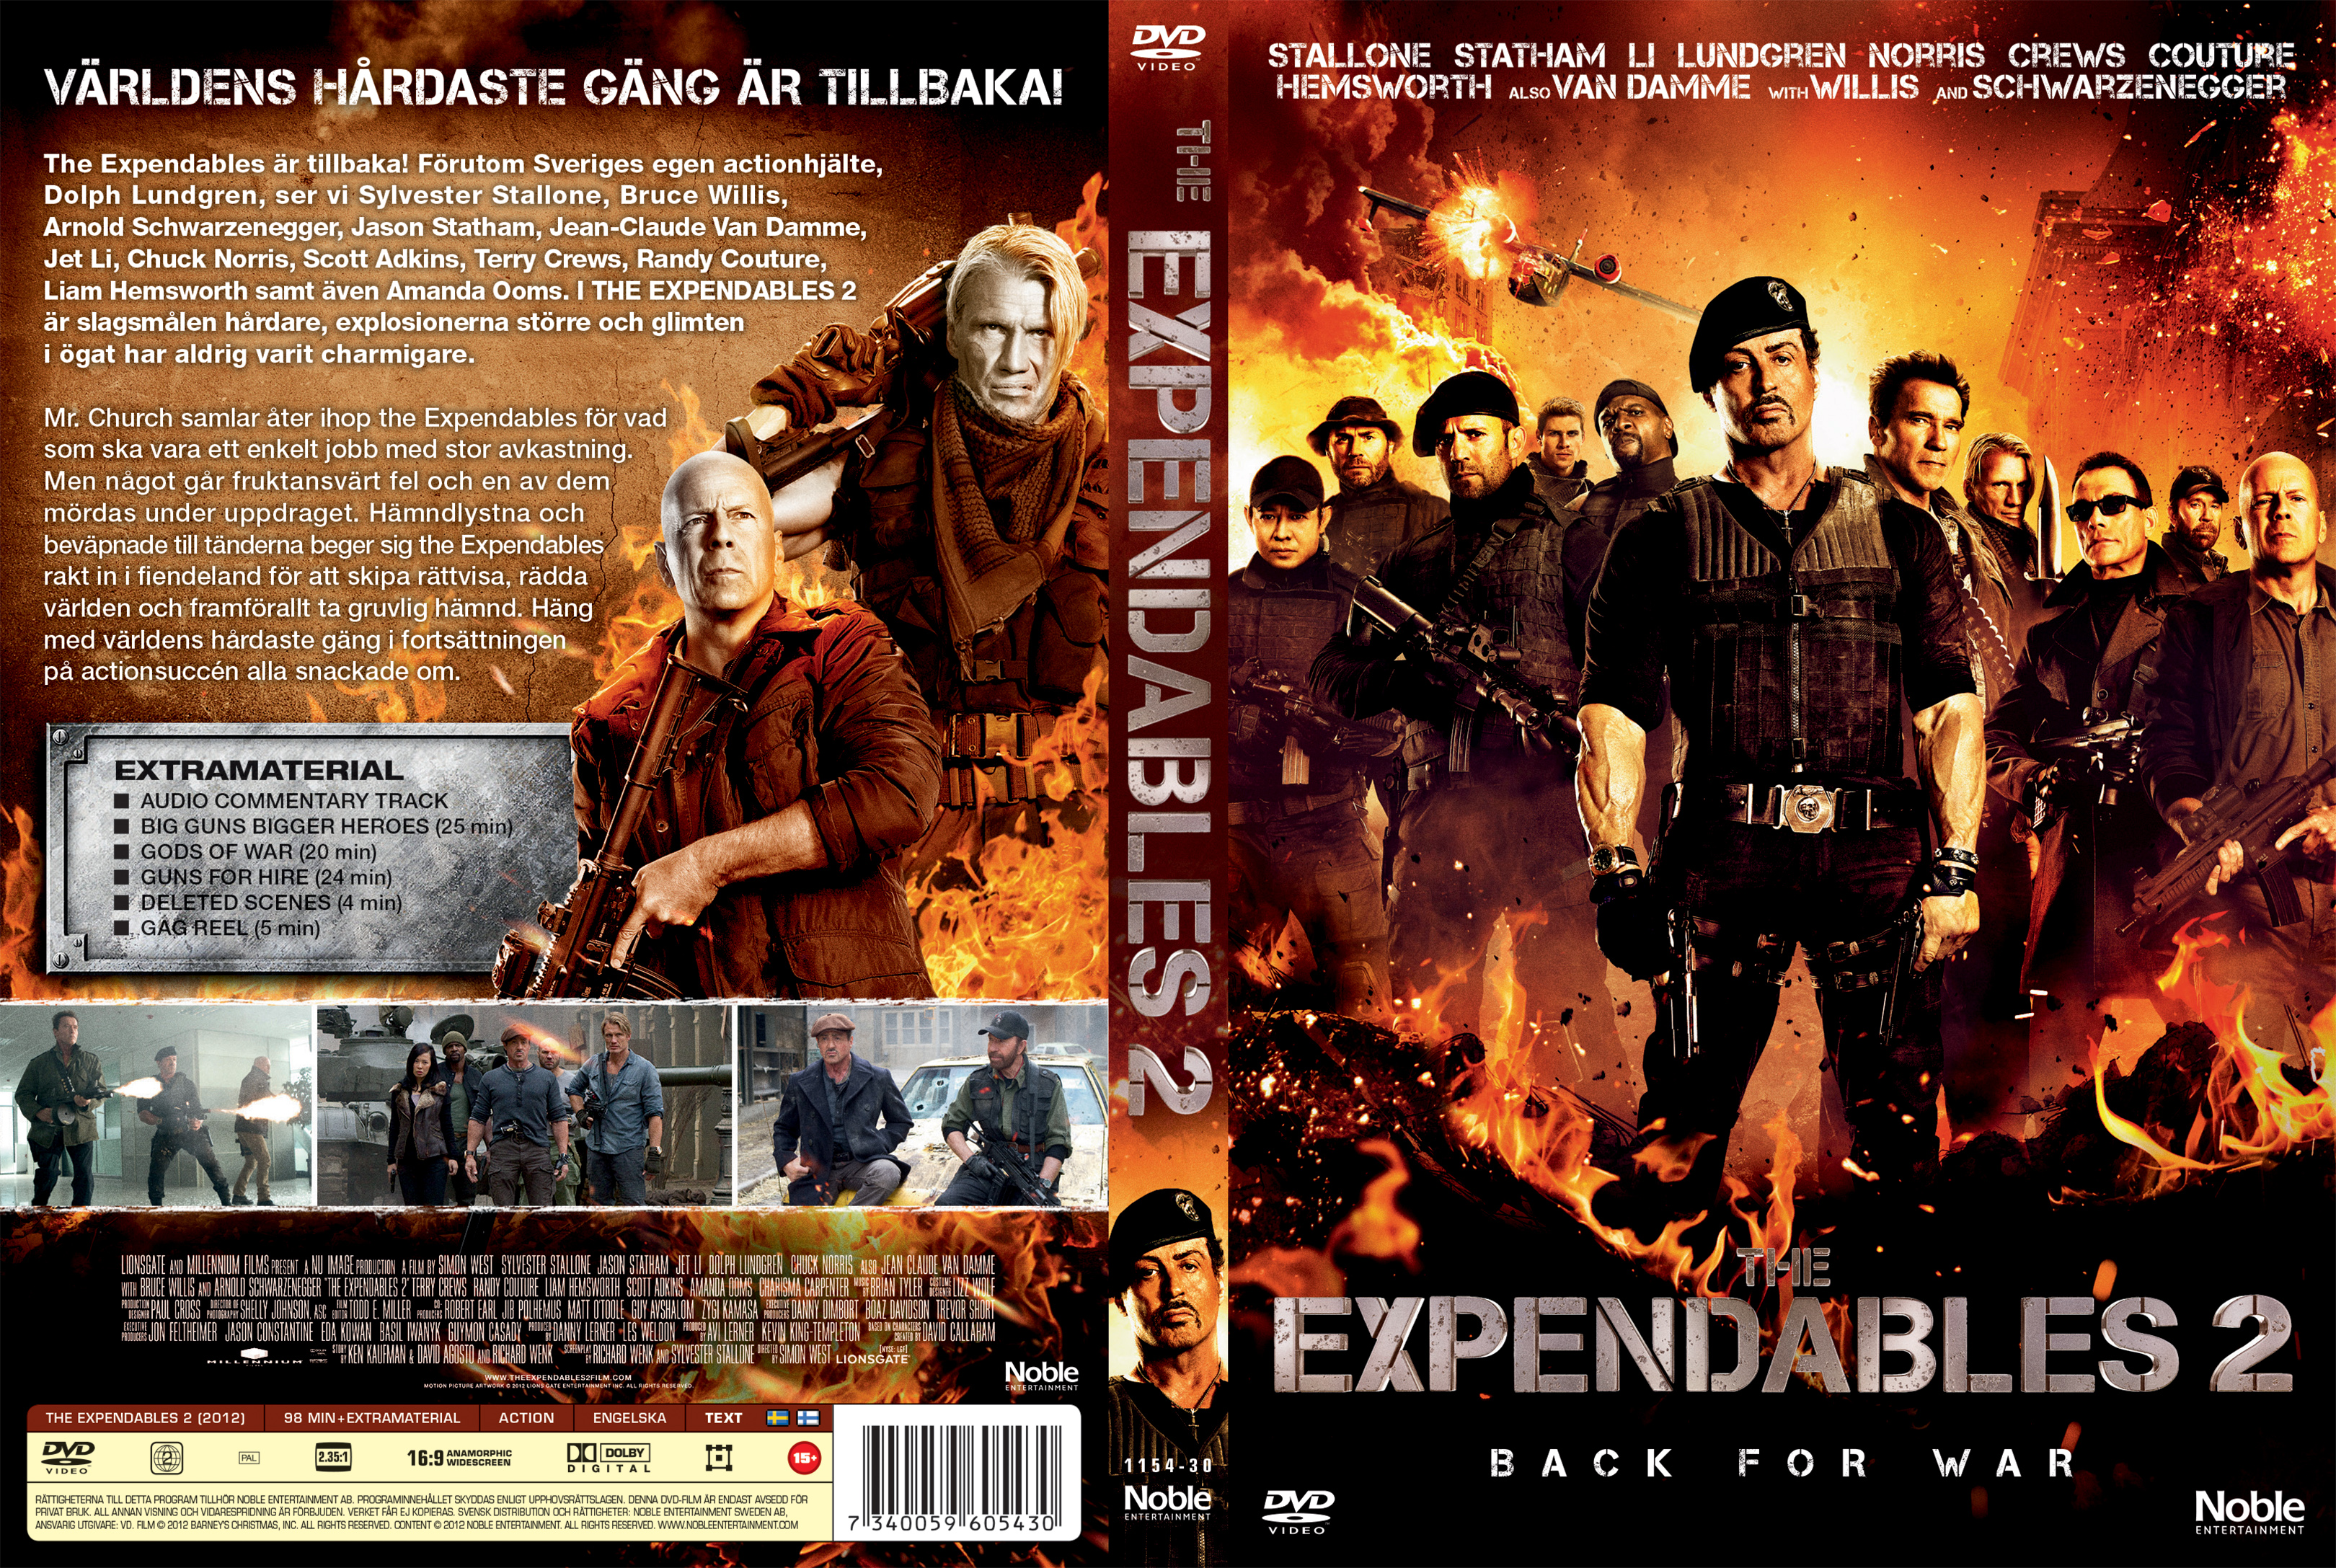 Неудержимый книга 13 читать глава 13. The Expendables 2, 2012 DVD Cover. The Expendables 3 обложка DVD. Chuck Norris in Неудержимые 2 the Expendables 2, 2012.